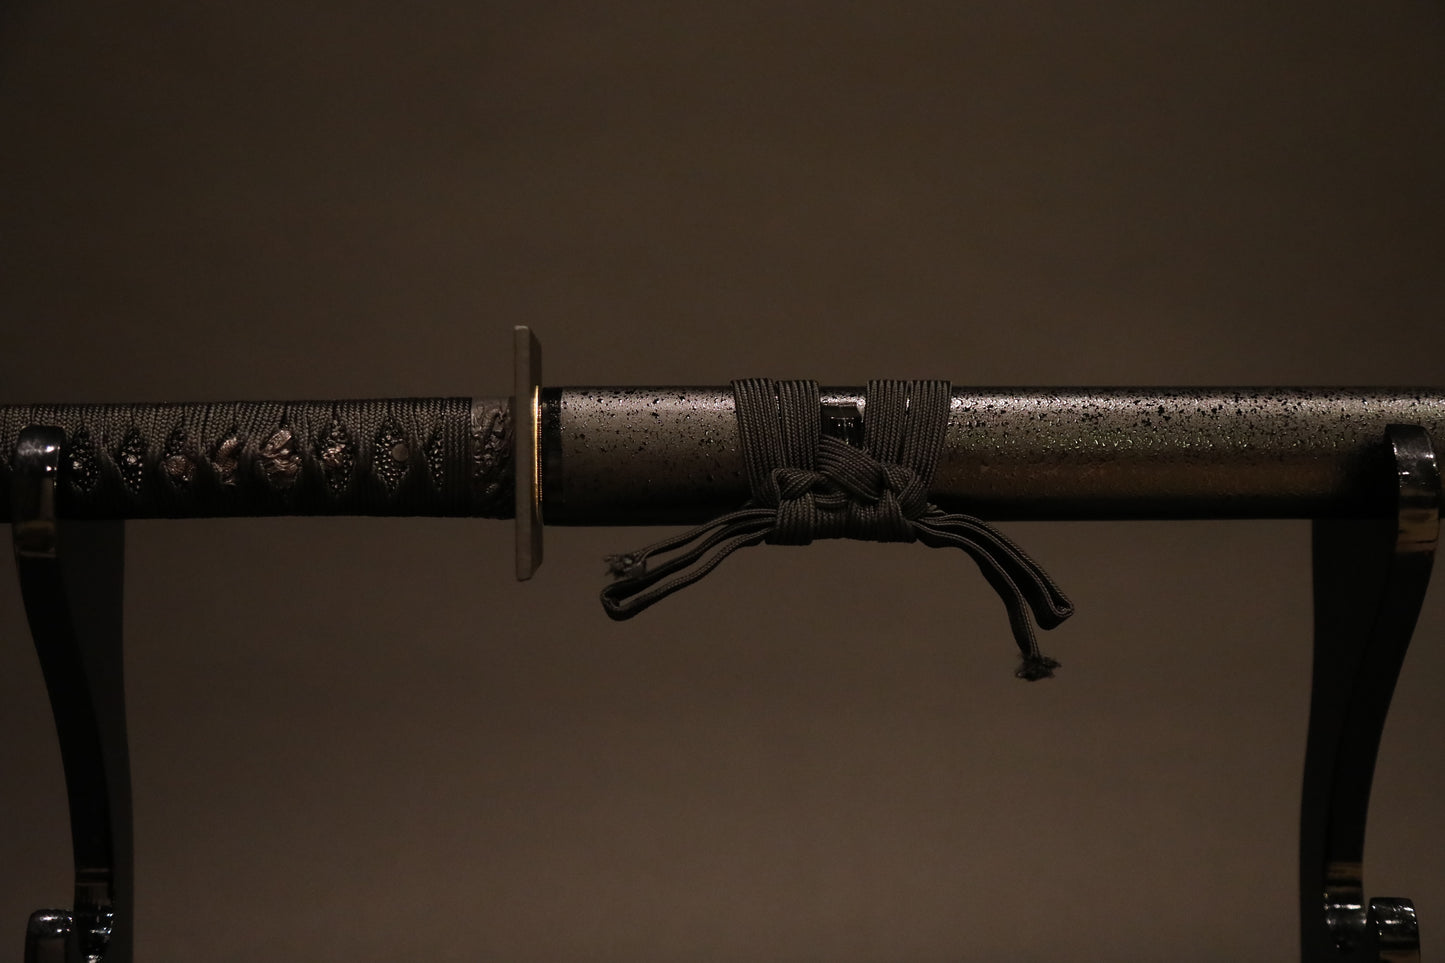 Ninja sword "SHINOBI KATANA" (Imitation)